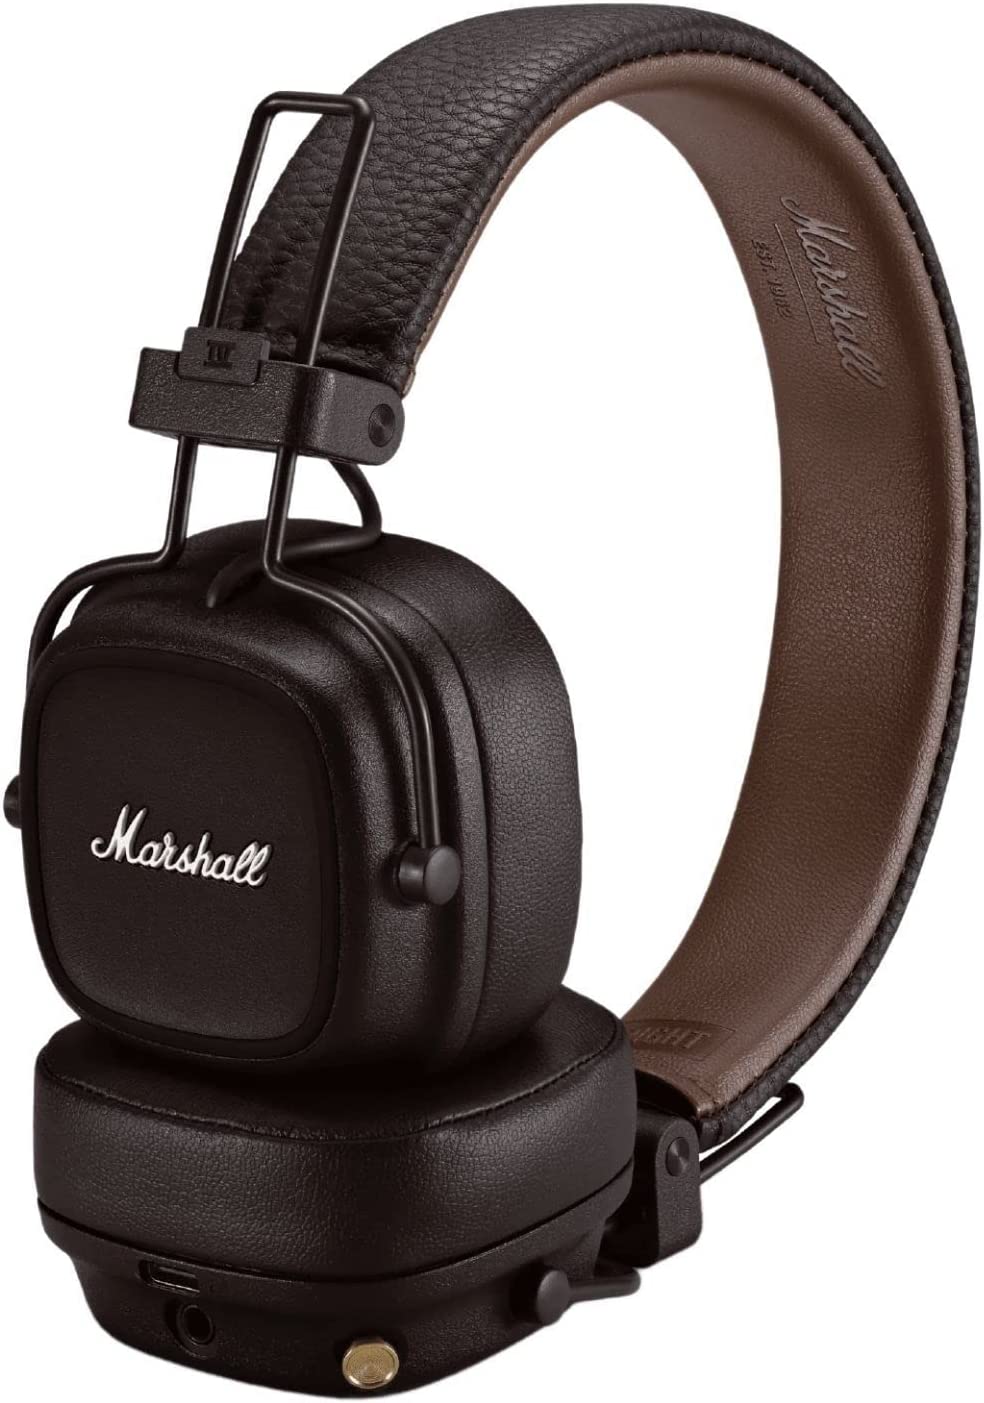 Marshall Major IV On-Ear Bluetooth Headphones, Brown ( Color: Brown, Size: Standard, Style: Headphone )